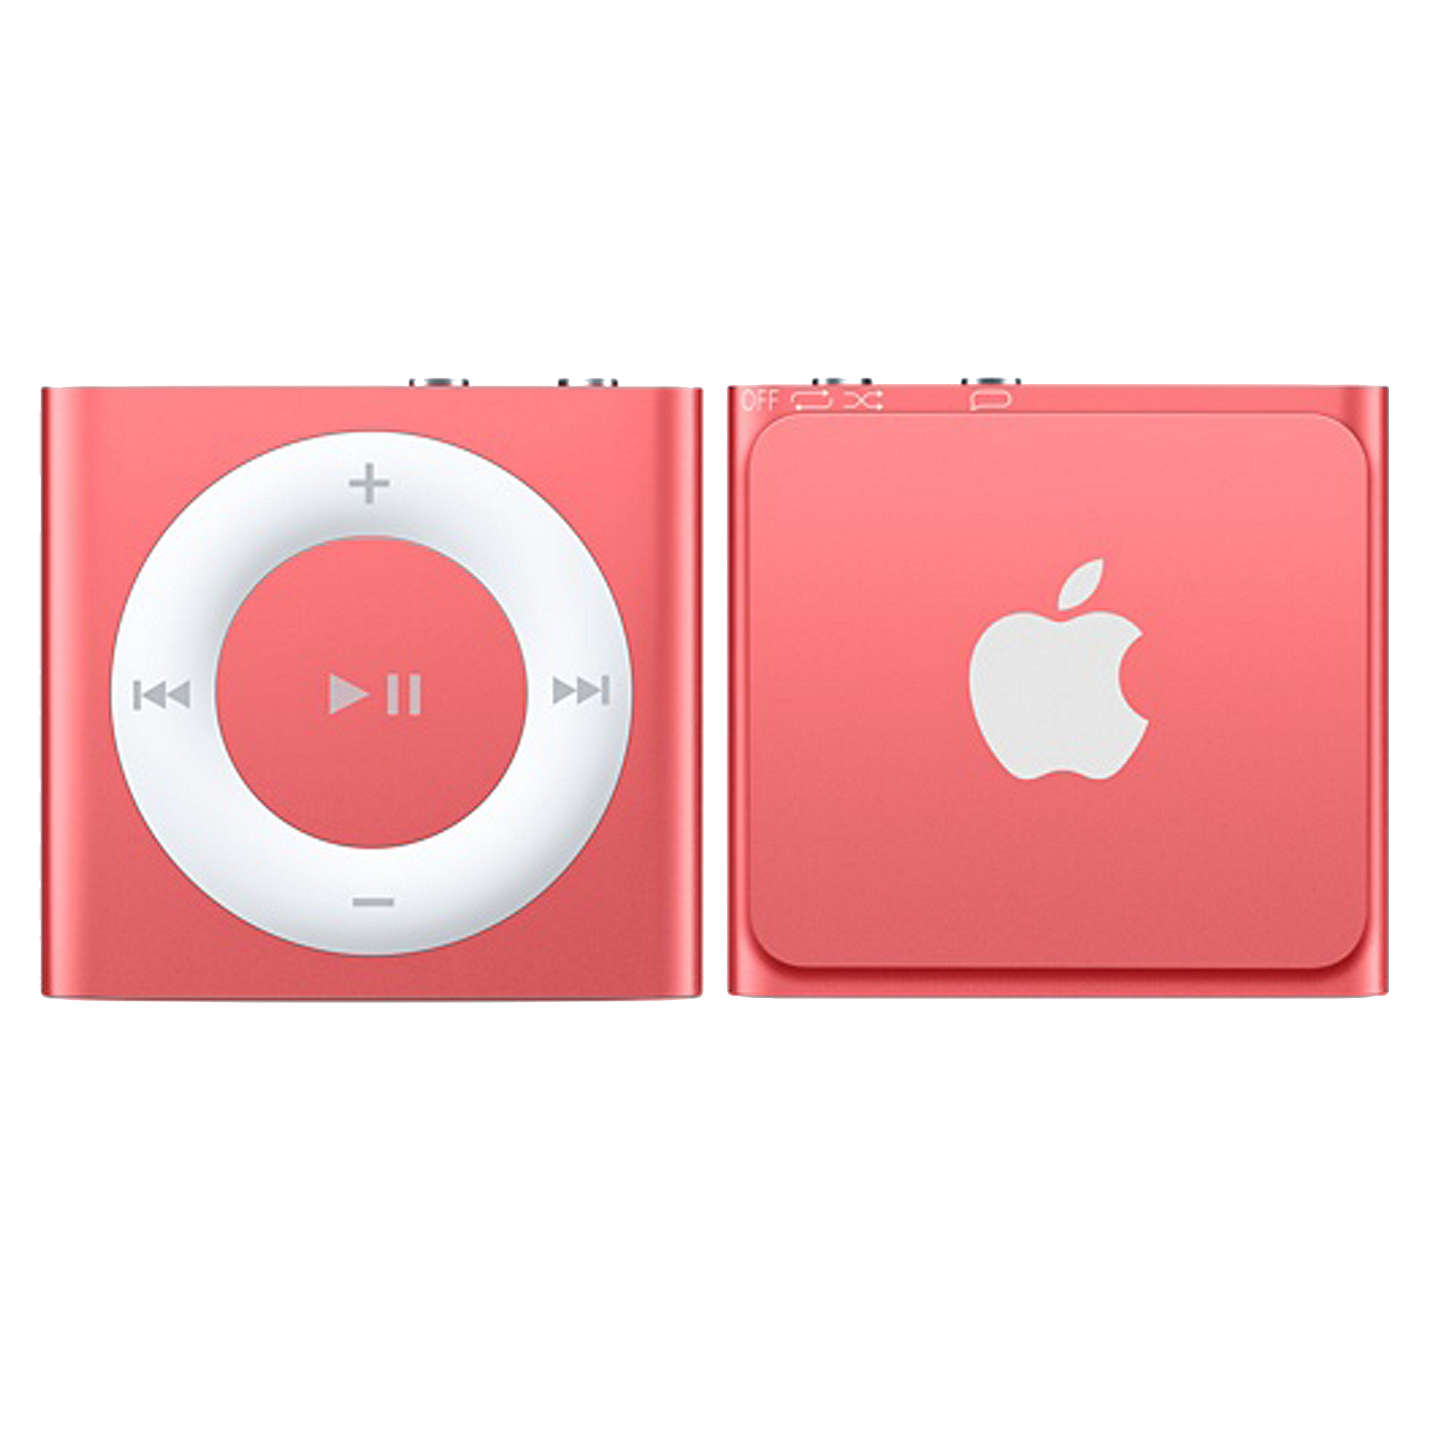 Offer: Apple iPod shuffle, 2GB | Pink at John Lewis